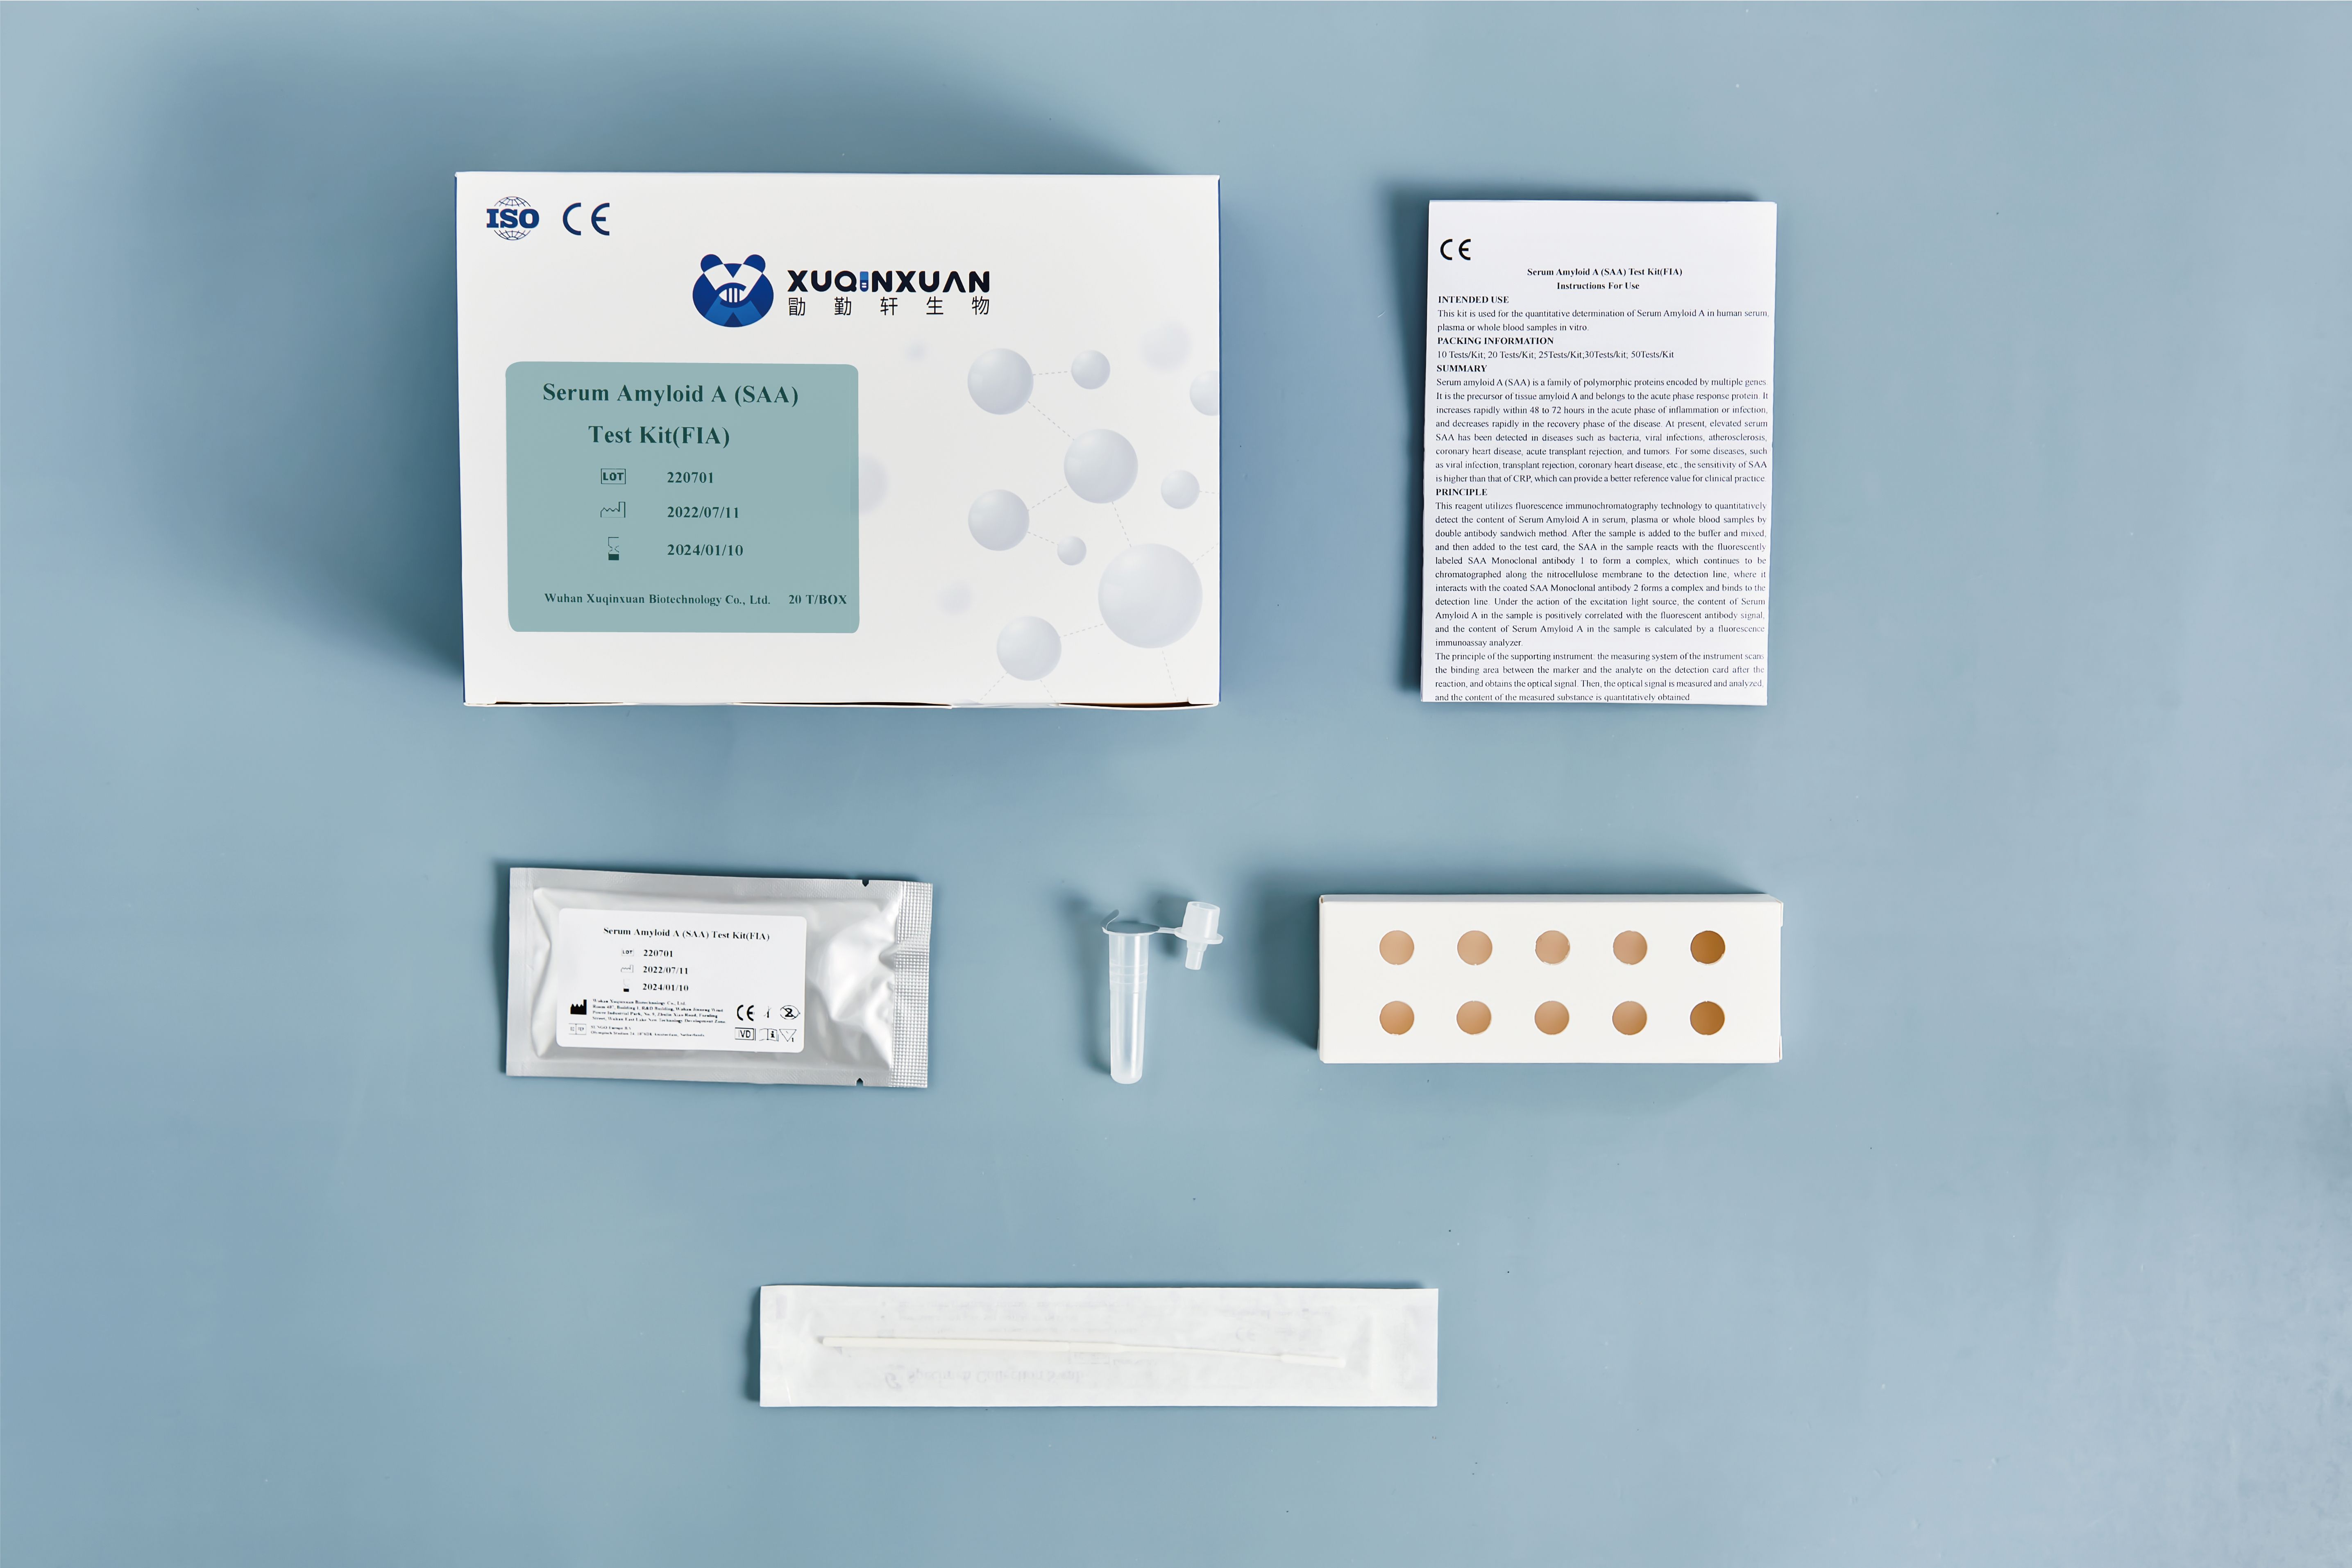 Serum Amyloid A (SAA) Test Kit(FIA) 